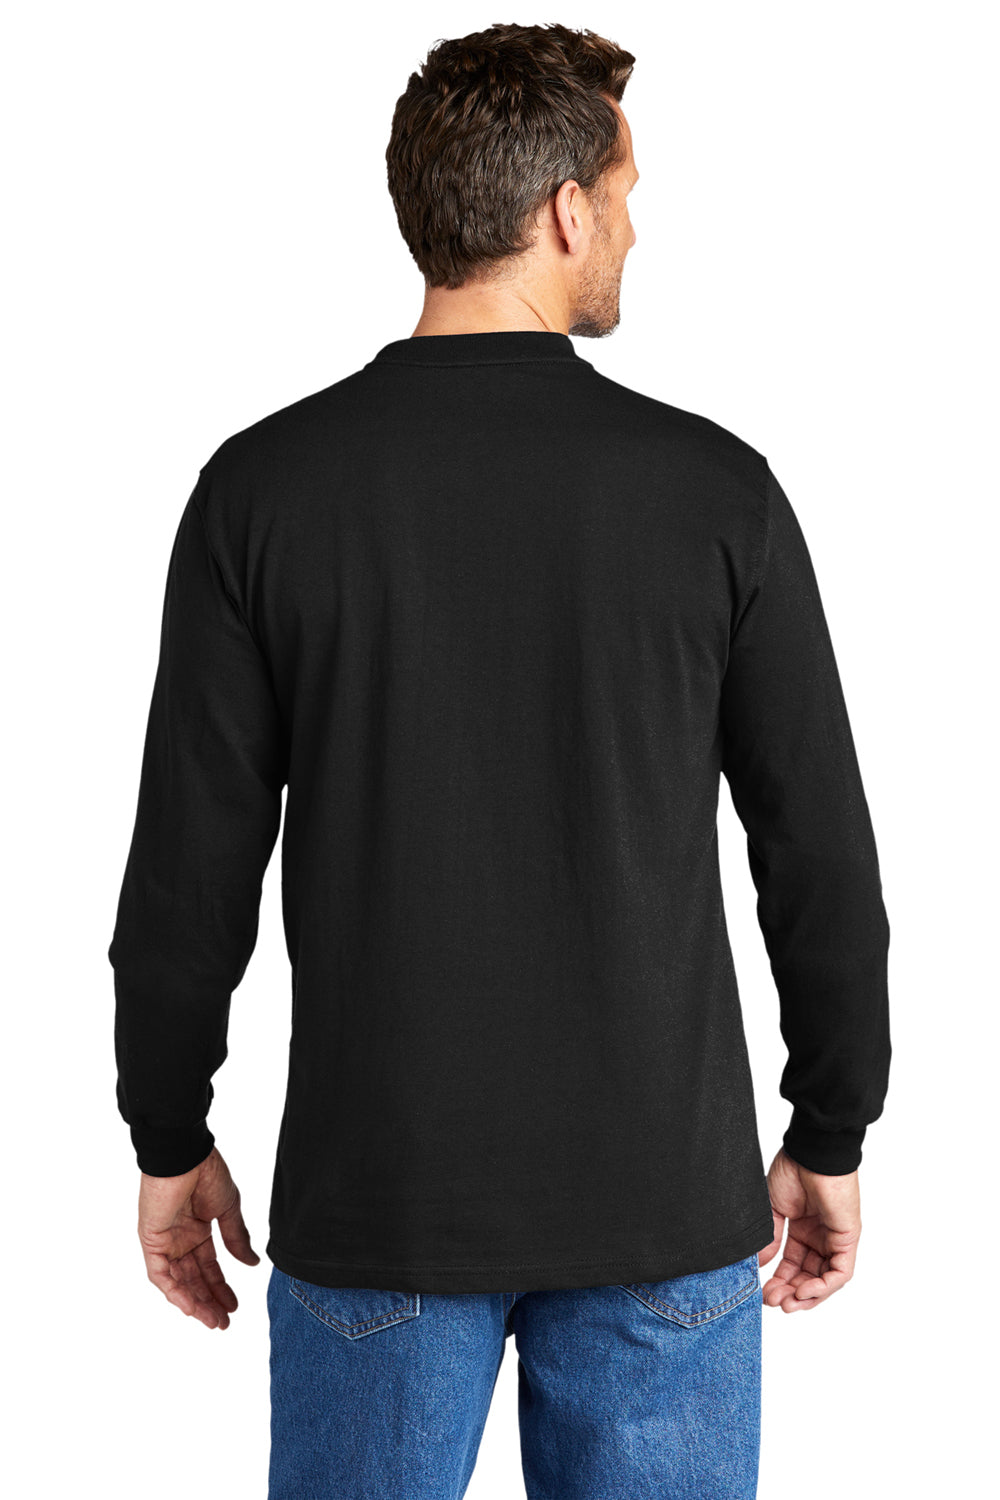 Carhartt CTK128 Mens Long Sleeve Henley T-Shirt w/ Pocket Black Model Back